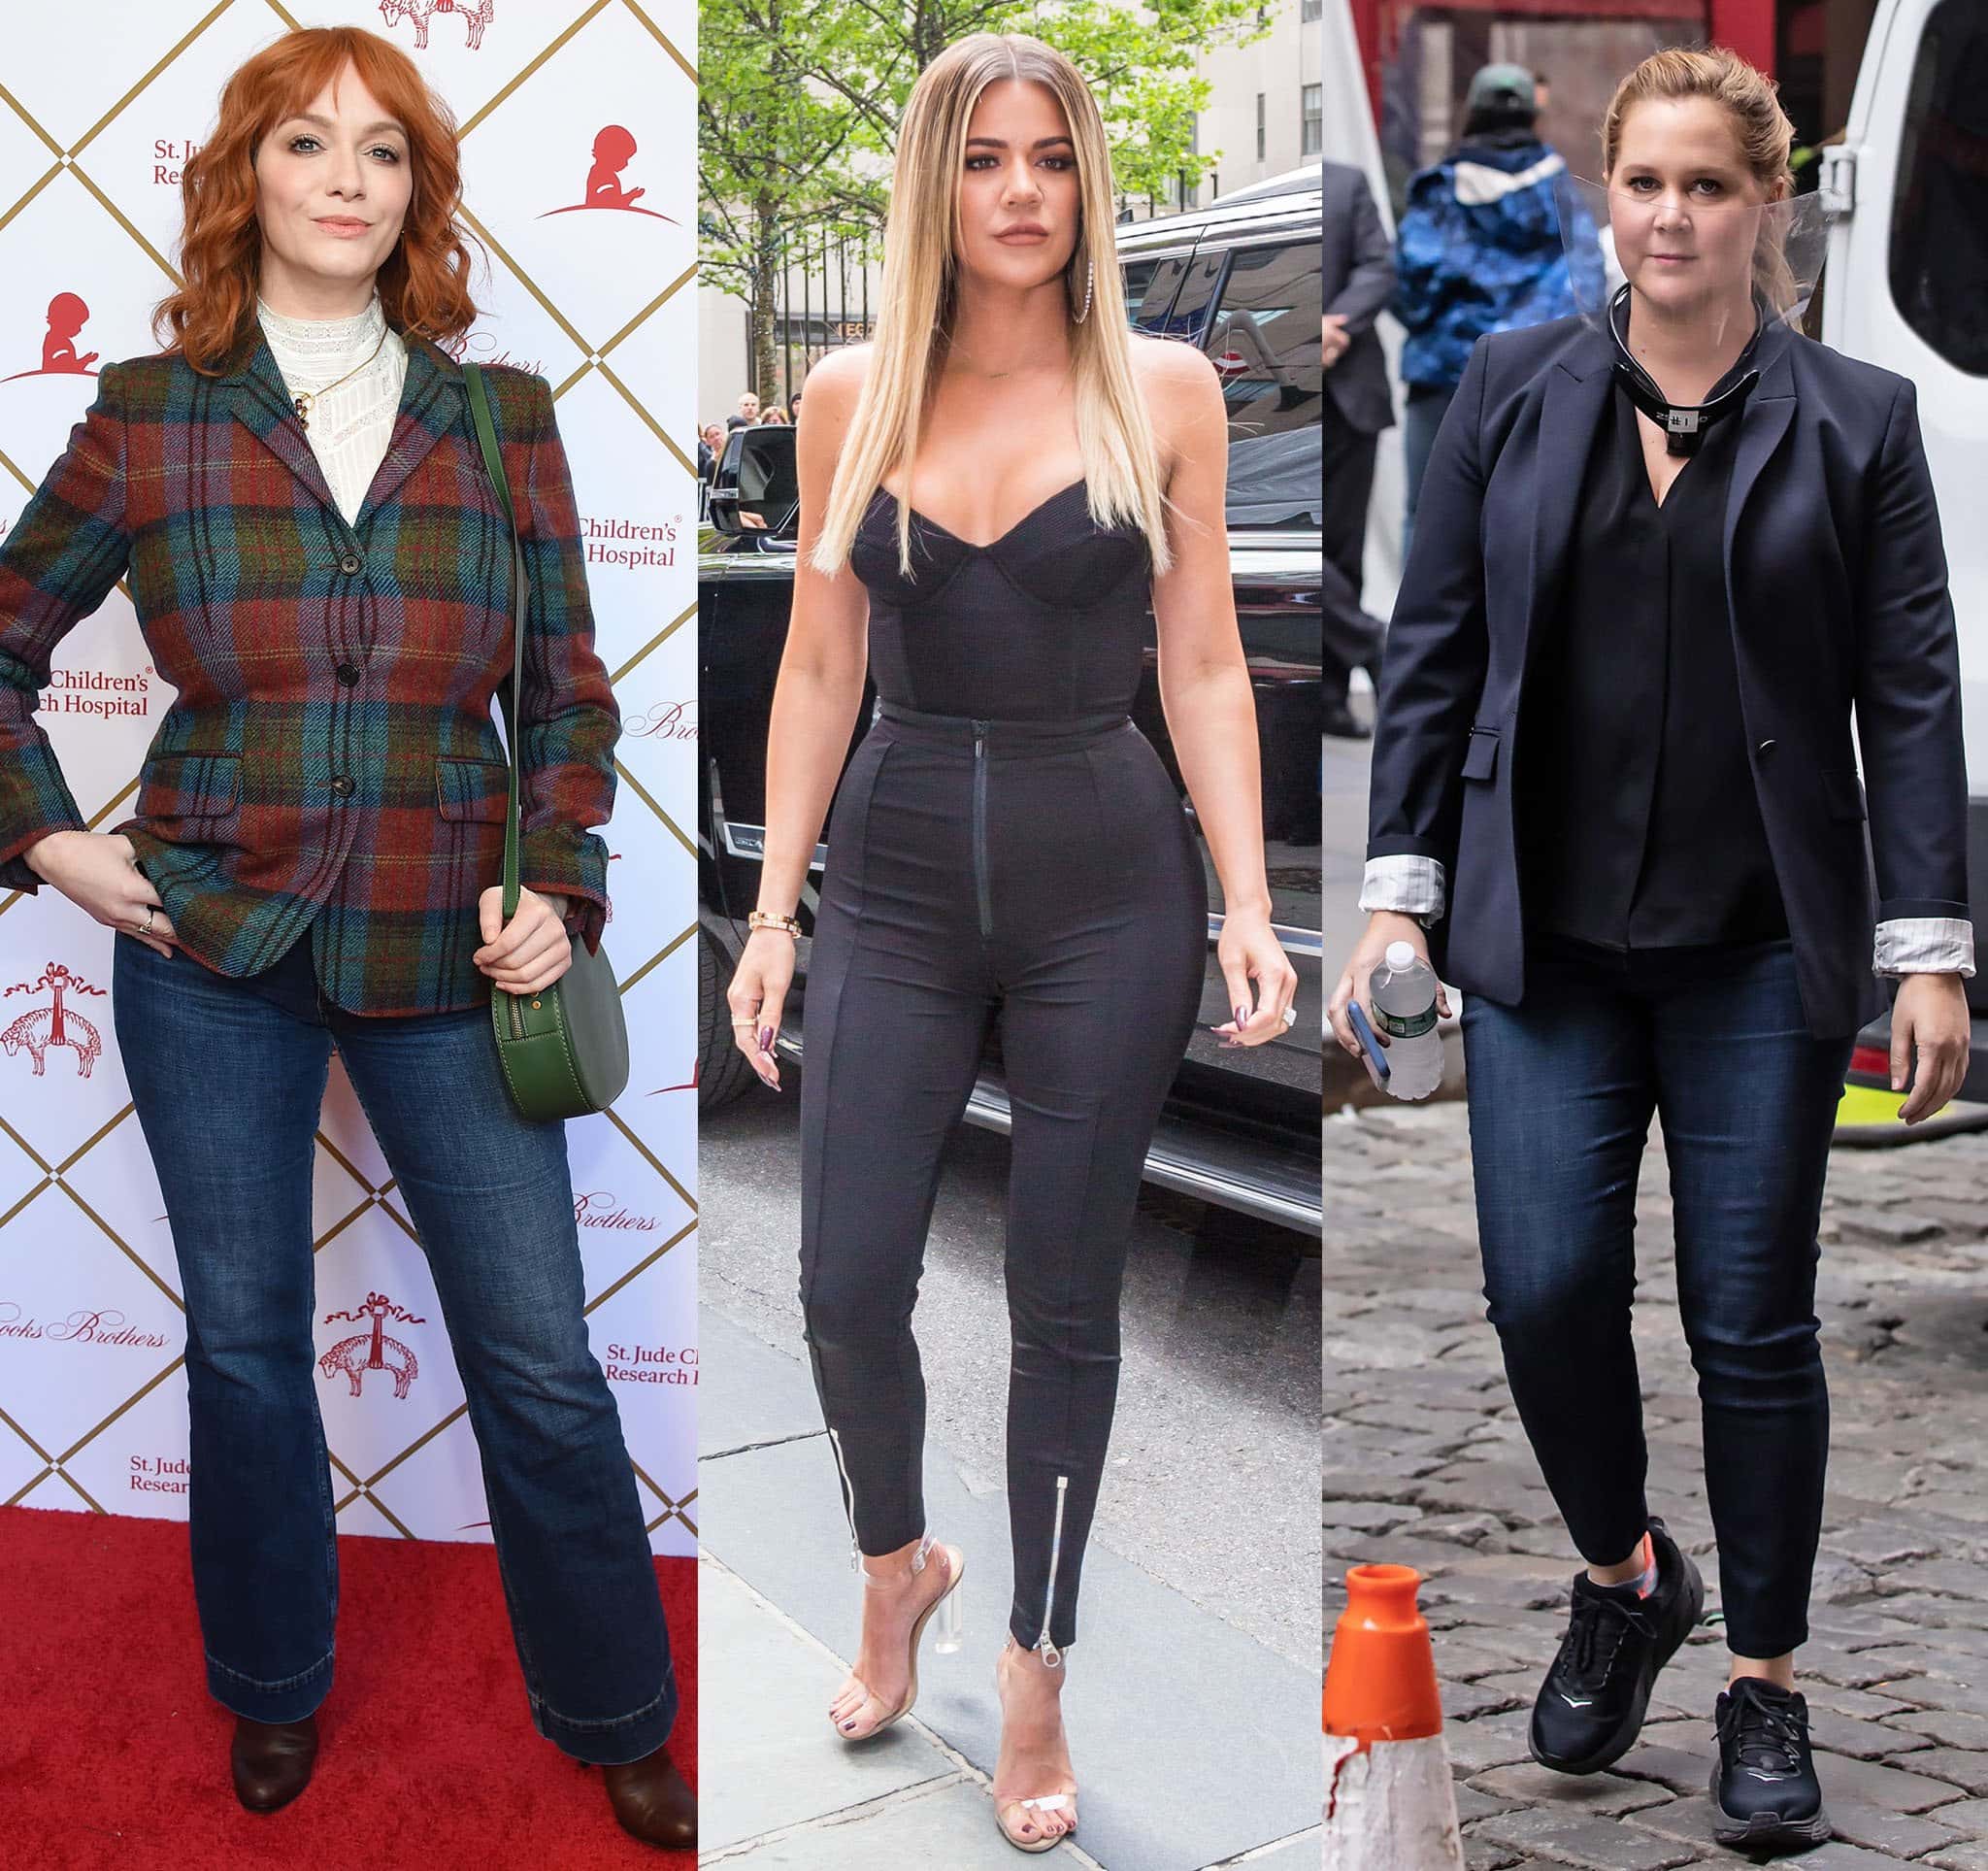 Plus-size celebrities Christina Hendricks, Khloe Kardashian, and Amy Schumer show how to wear jeans